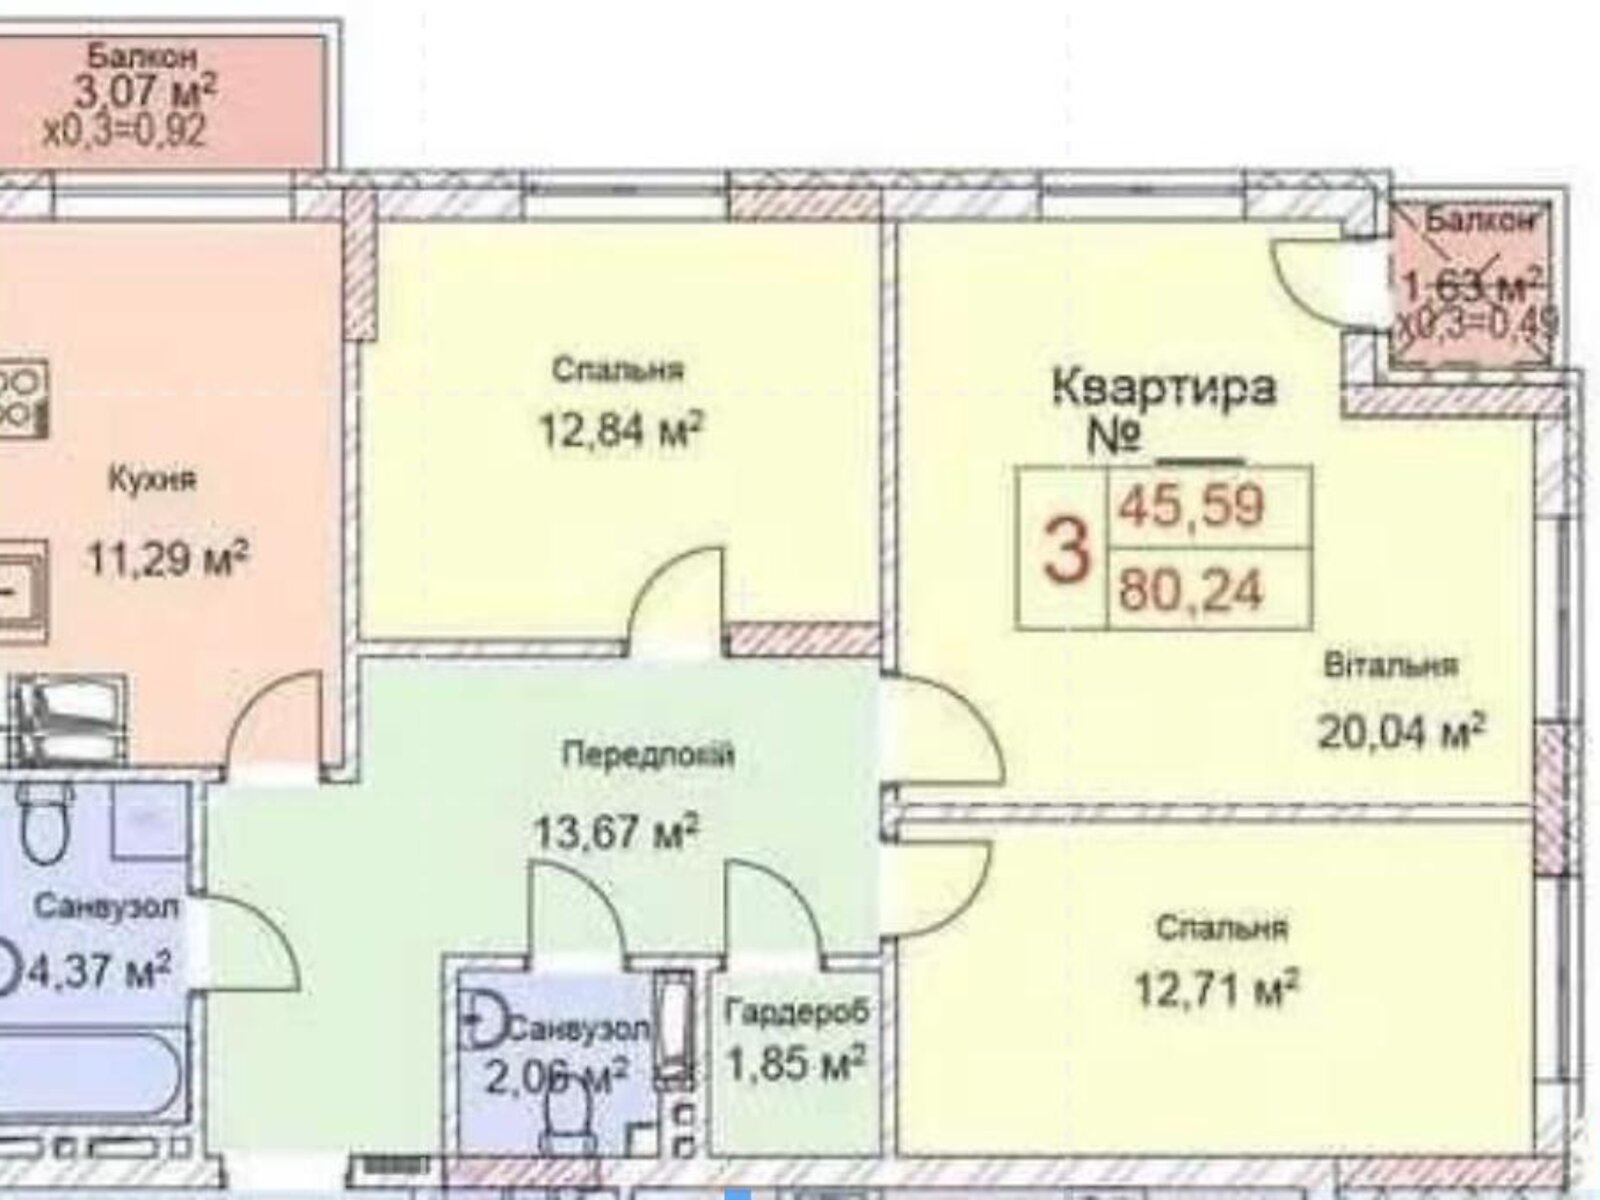 Продажа трехкомнатной квартиры в Киеве, на ул. Глубочицкая 13, район Лукьяновка фото 1